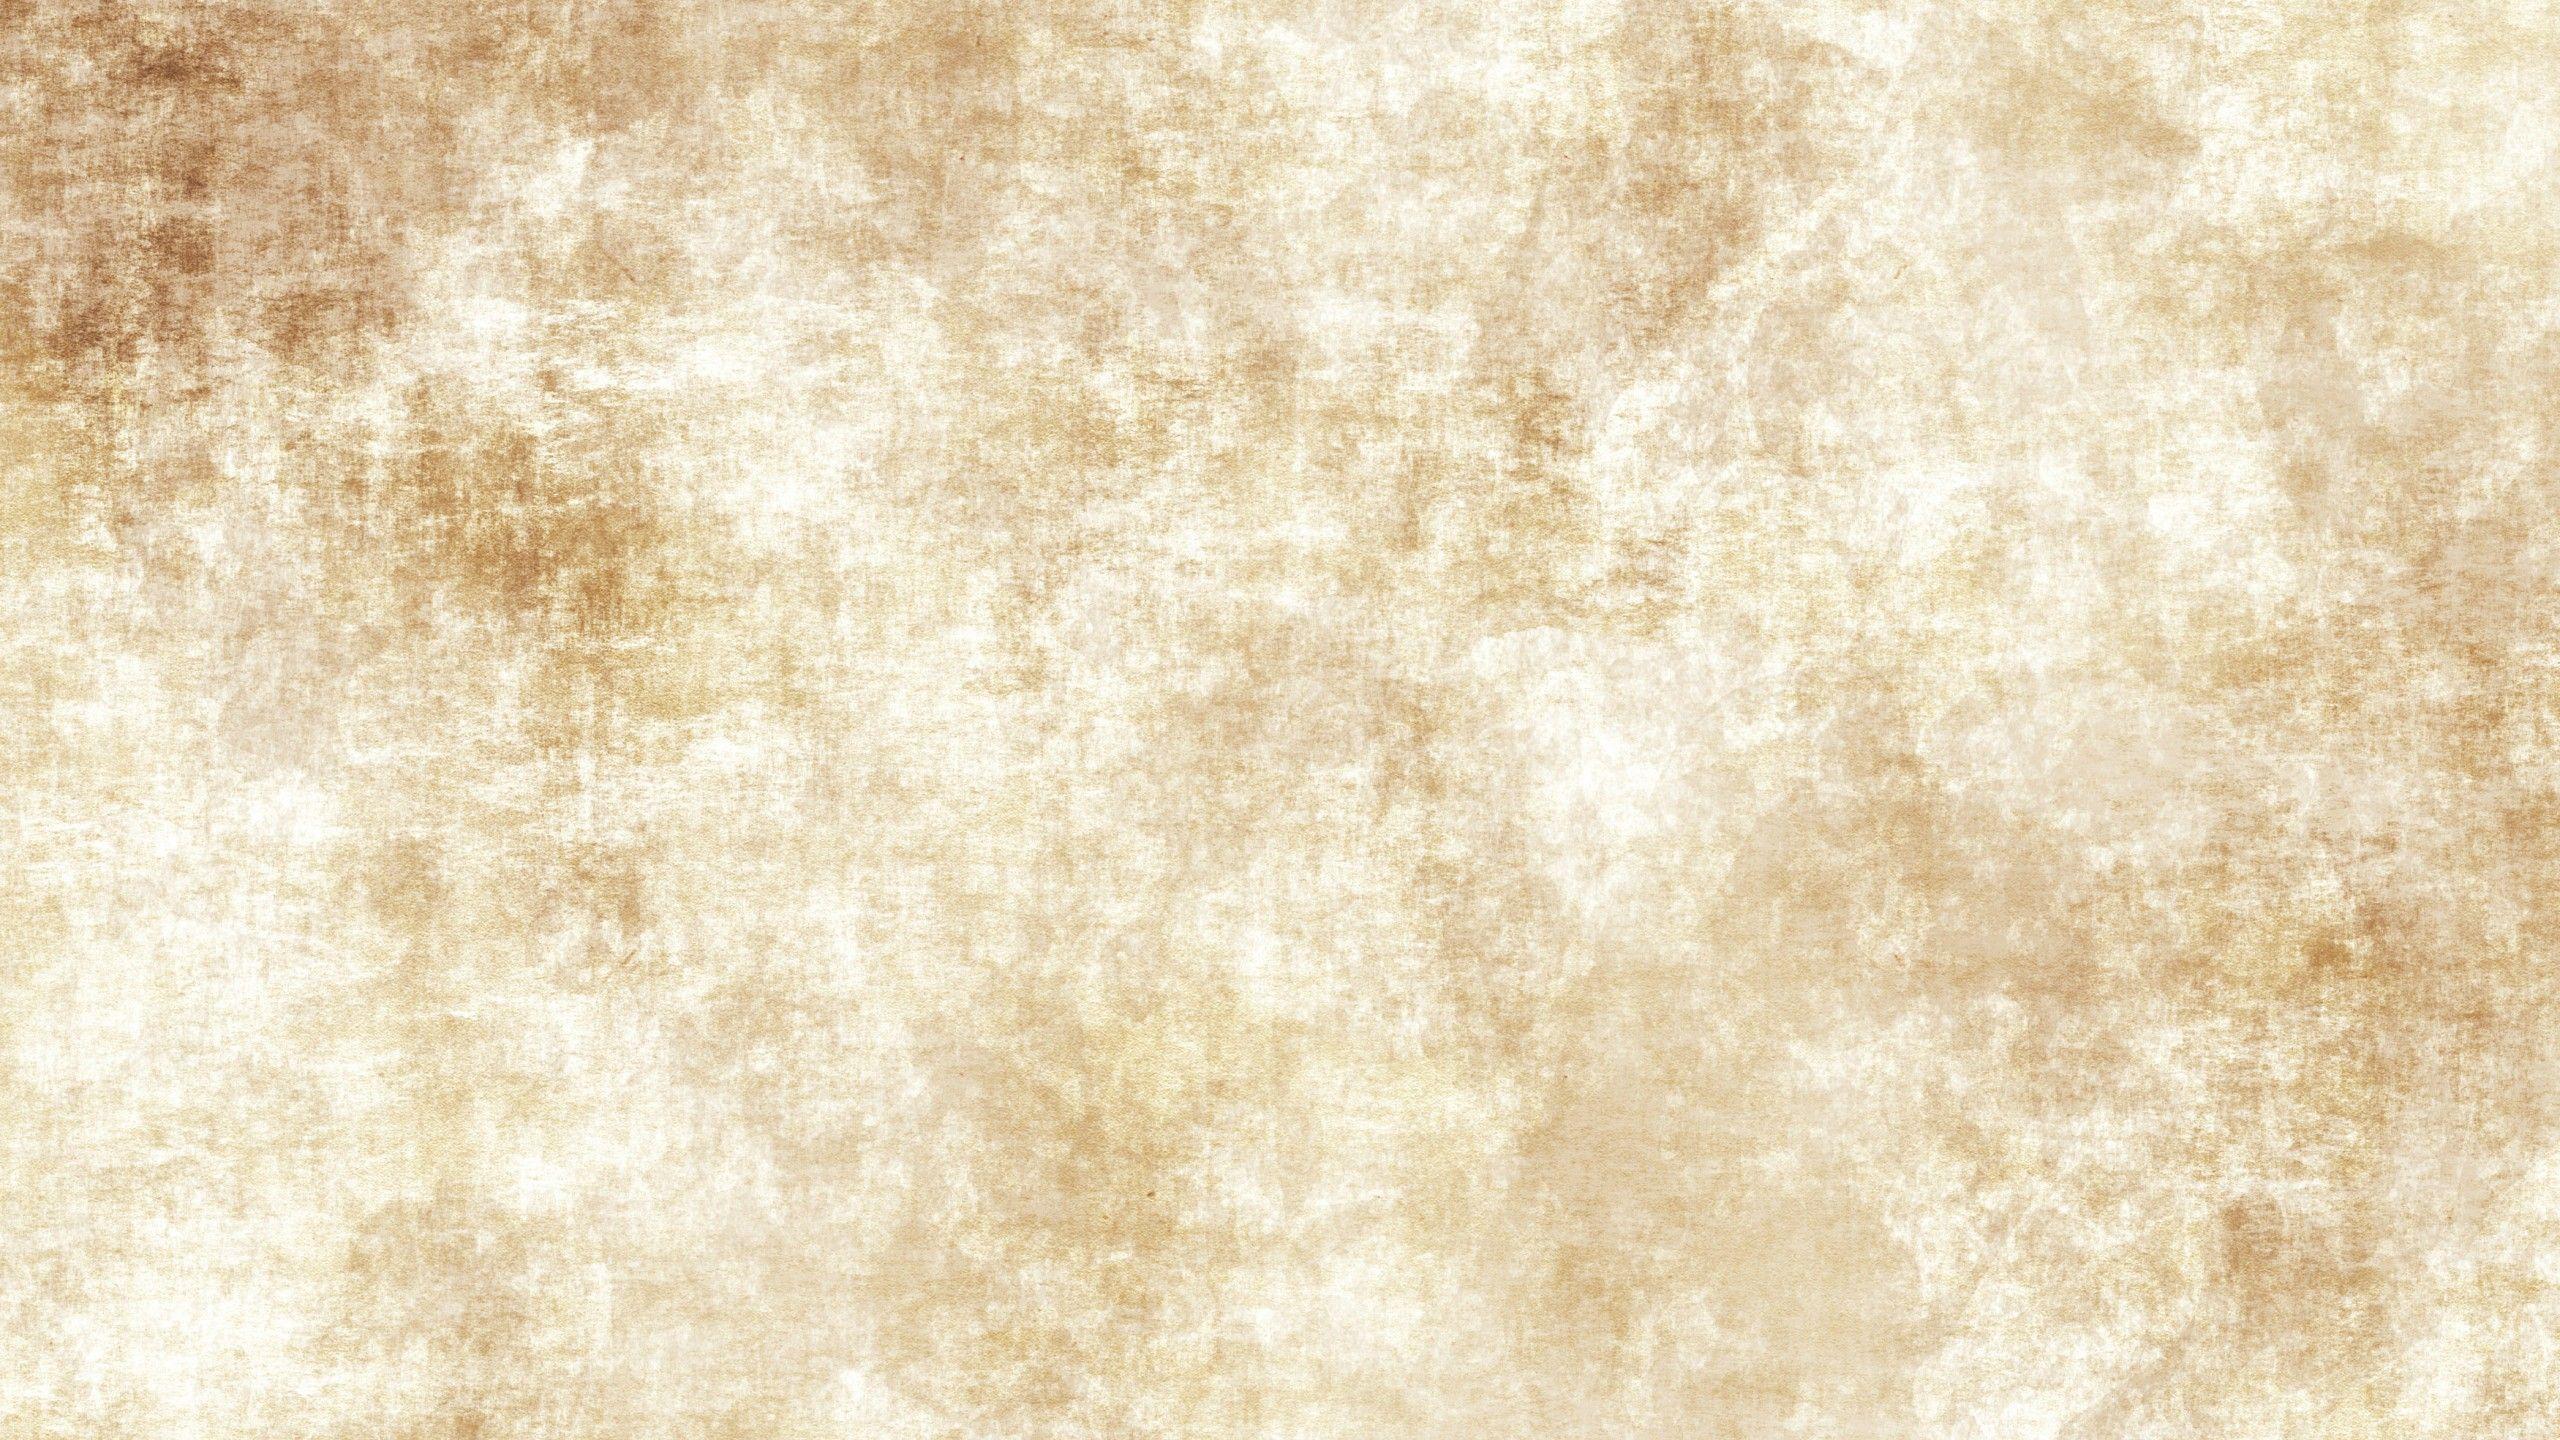 Parchment Wallpapers - Top Free Parchment Backgrounds ...